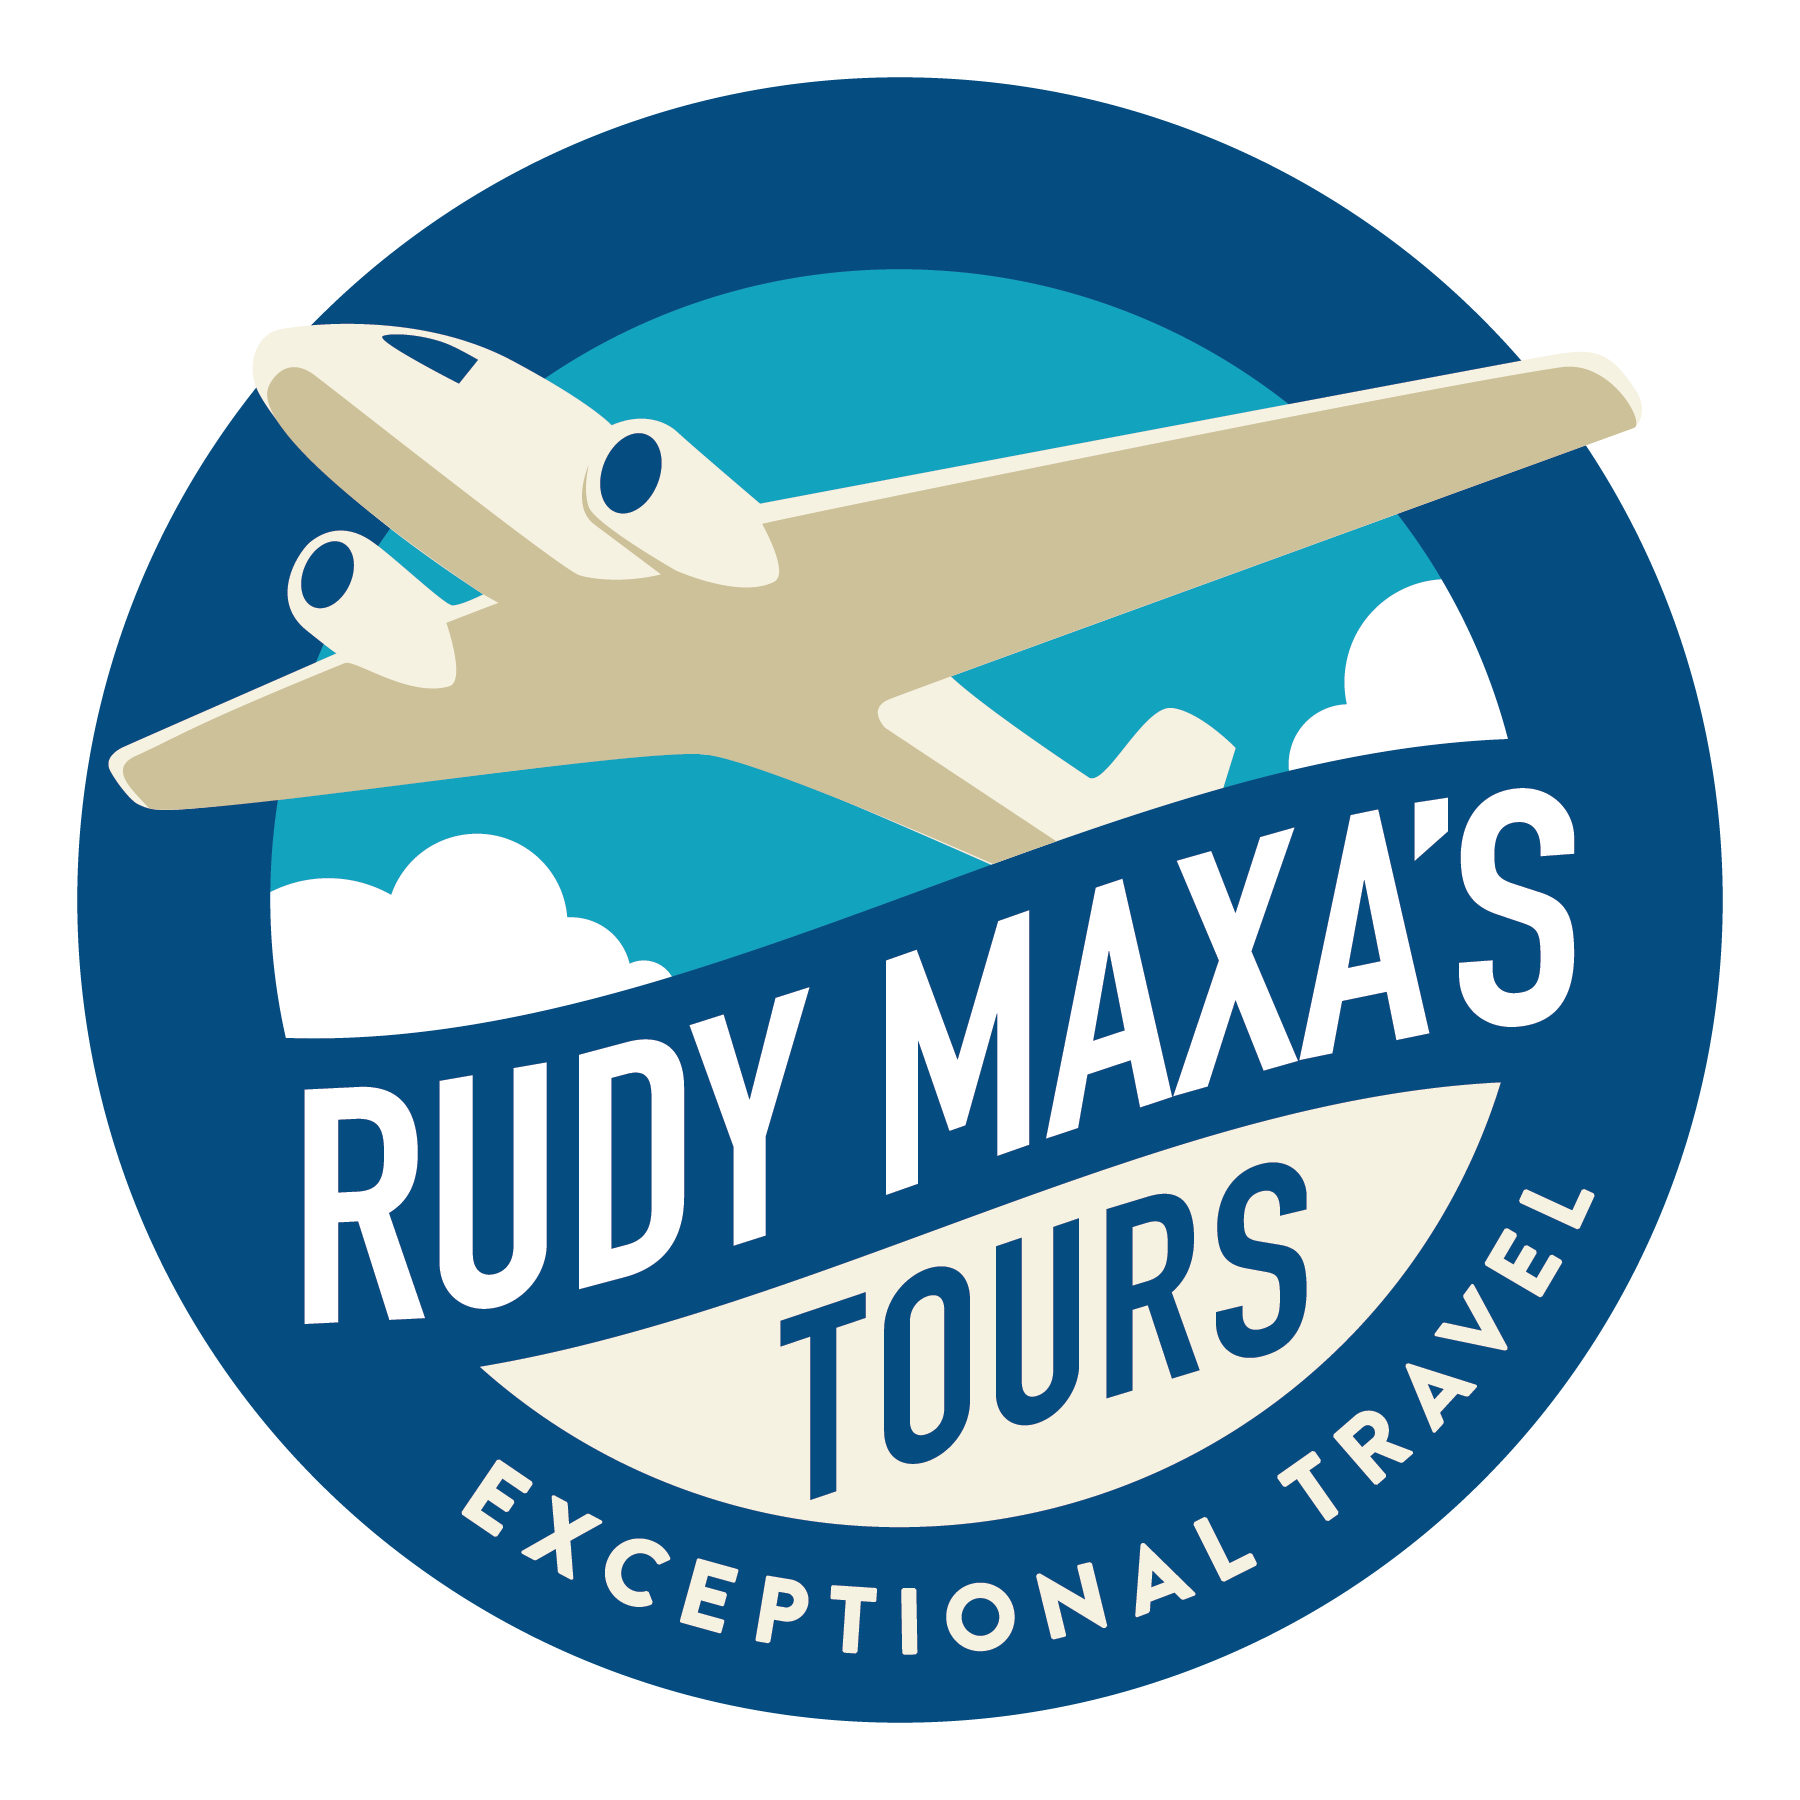 Rudy Maxa's Tours